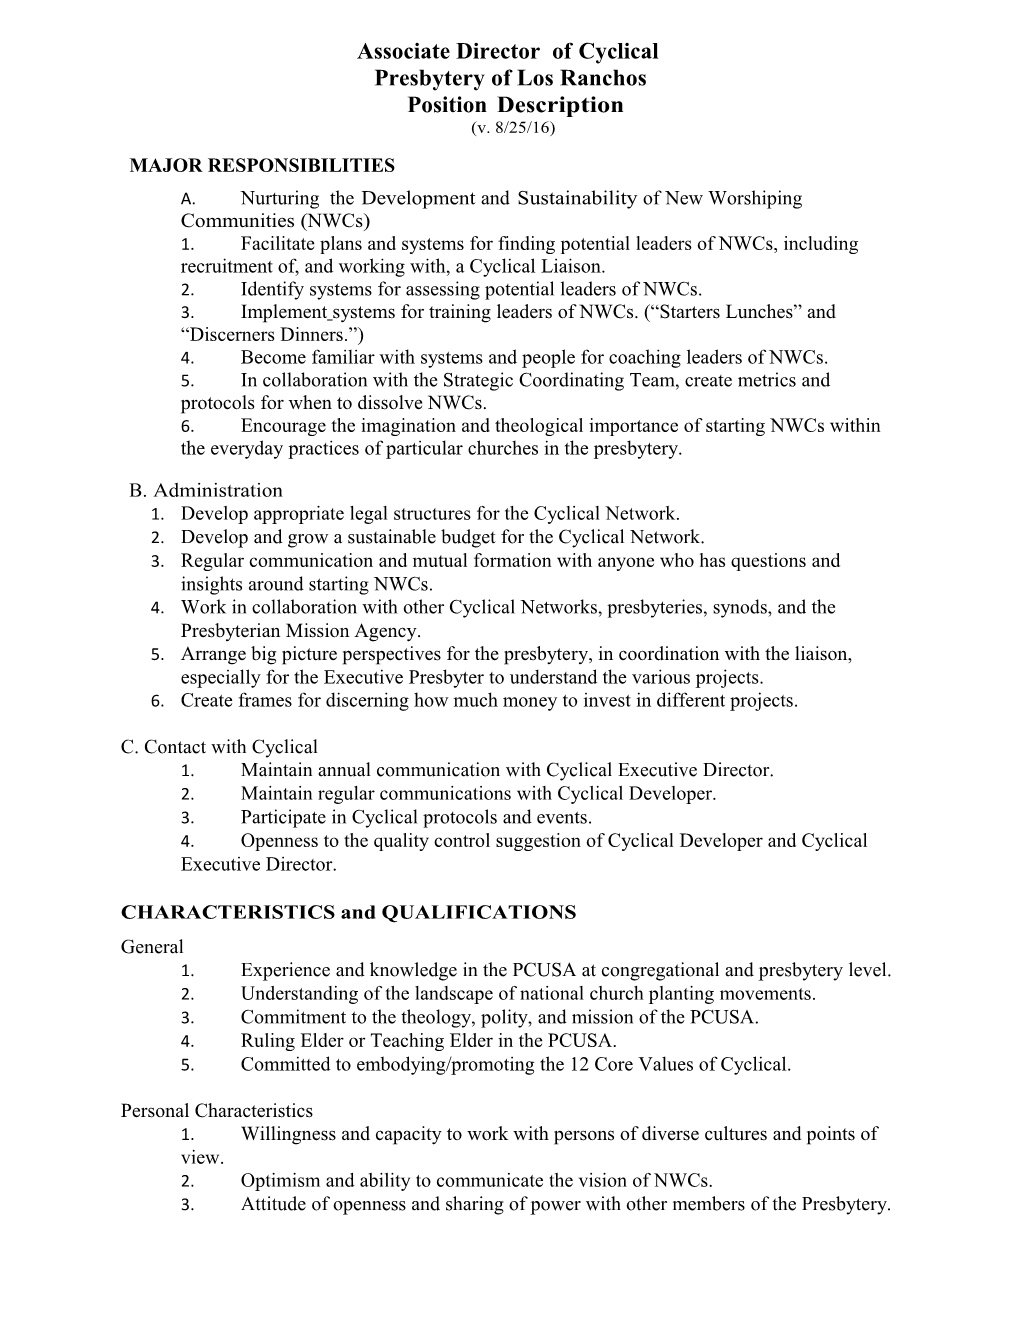 Page 2, Position Description for Associate Director of Cyclical, Presbytery of Los Ranchos